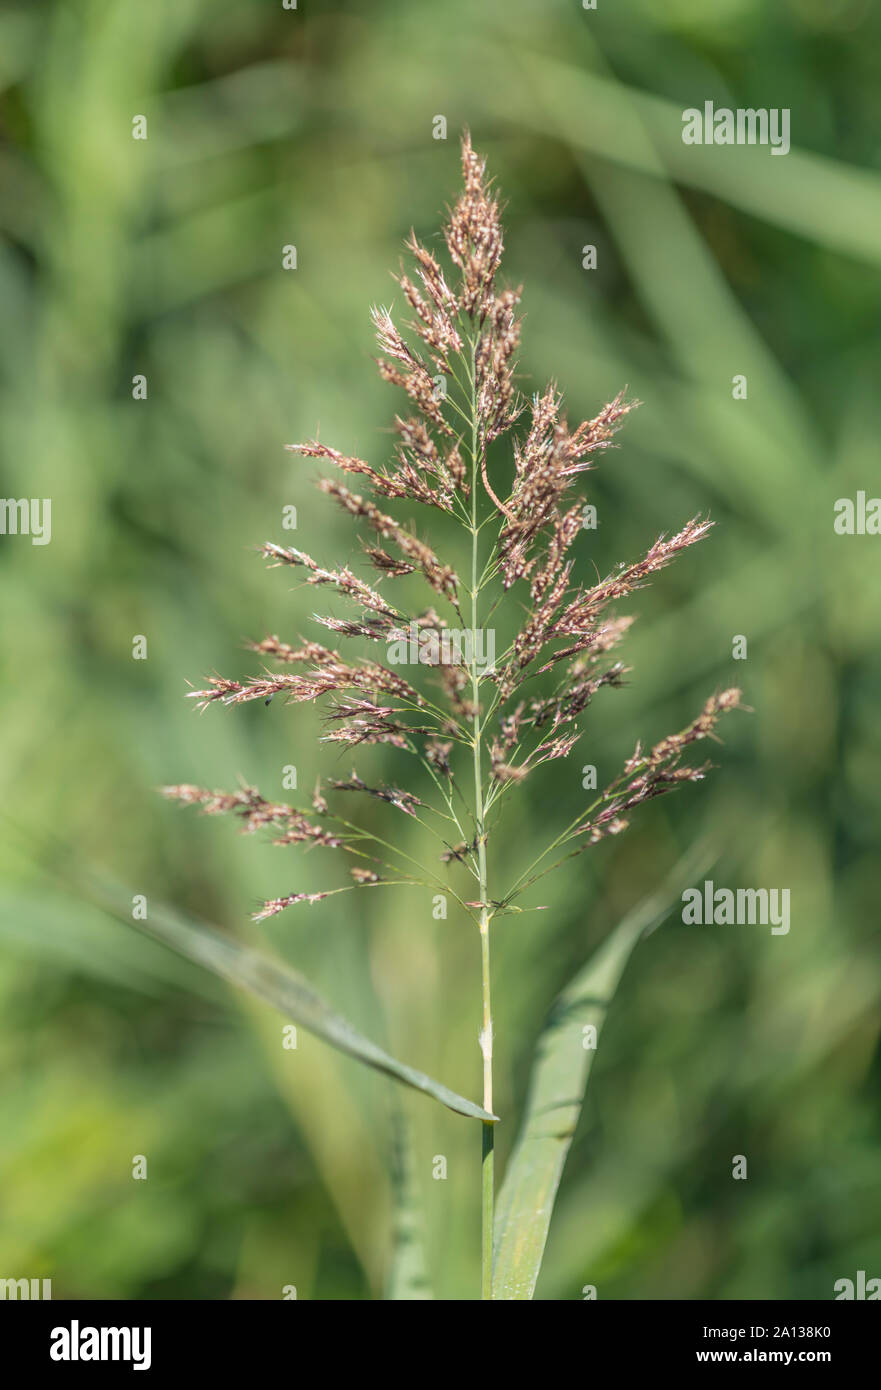 Common Reed / Phragmites australis or Phragmites communis flower head panicle (end of season). Don't  confuse with Bulrush / Reedmace - Typha species. Stock Photo